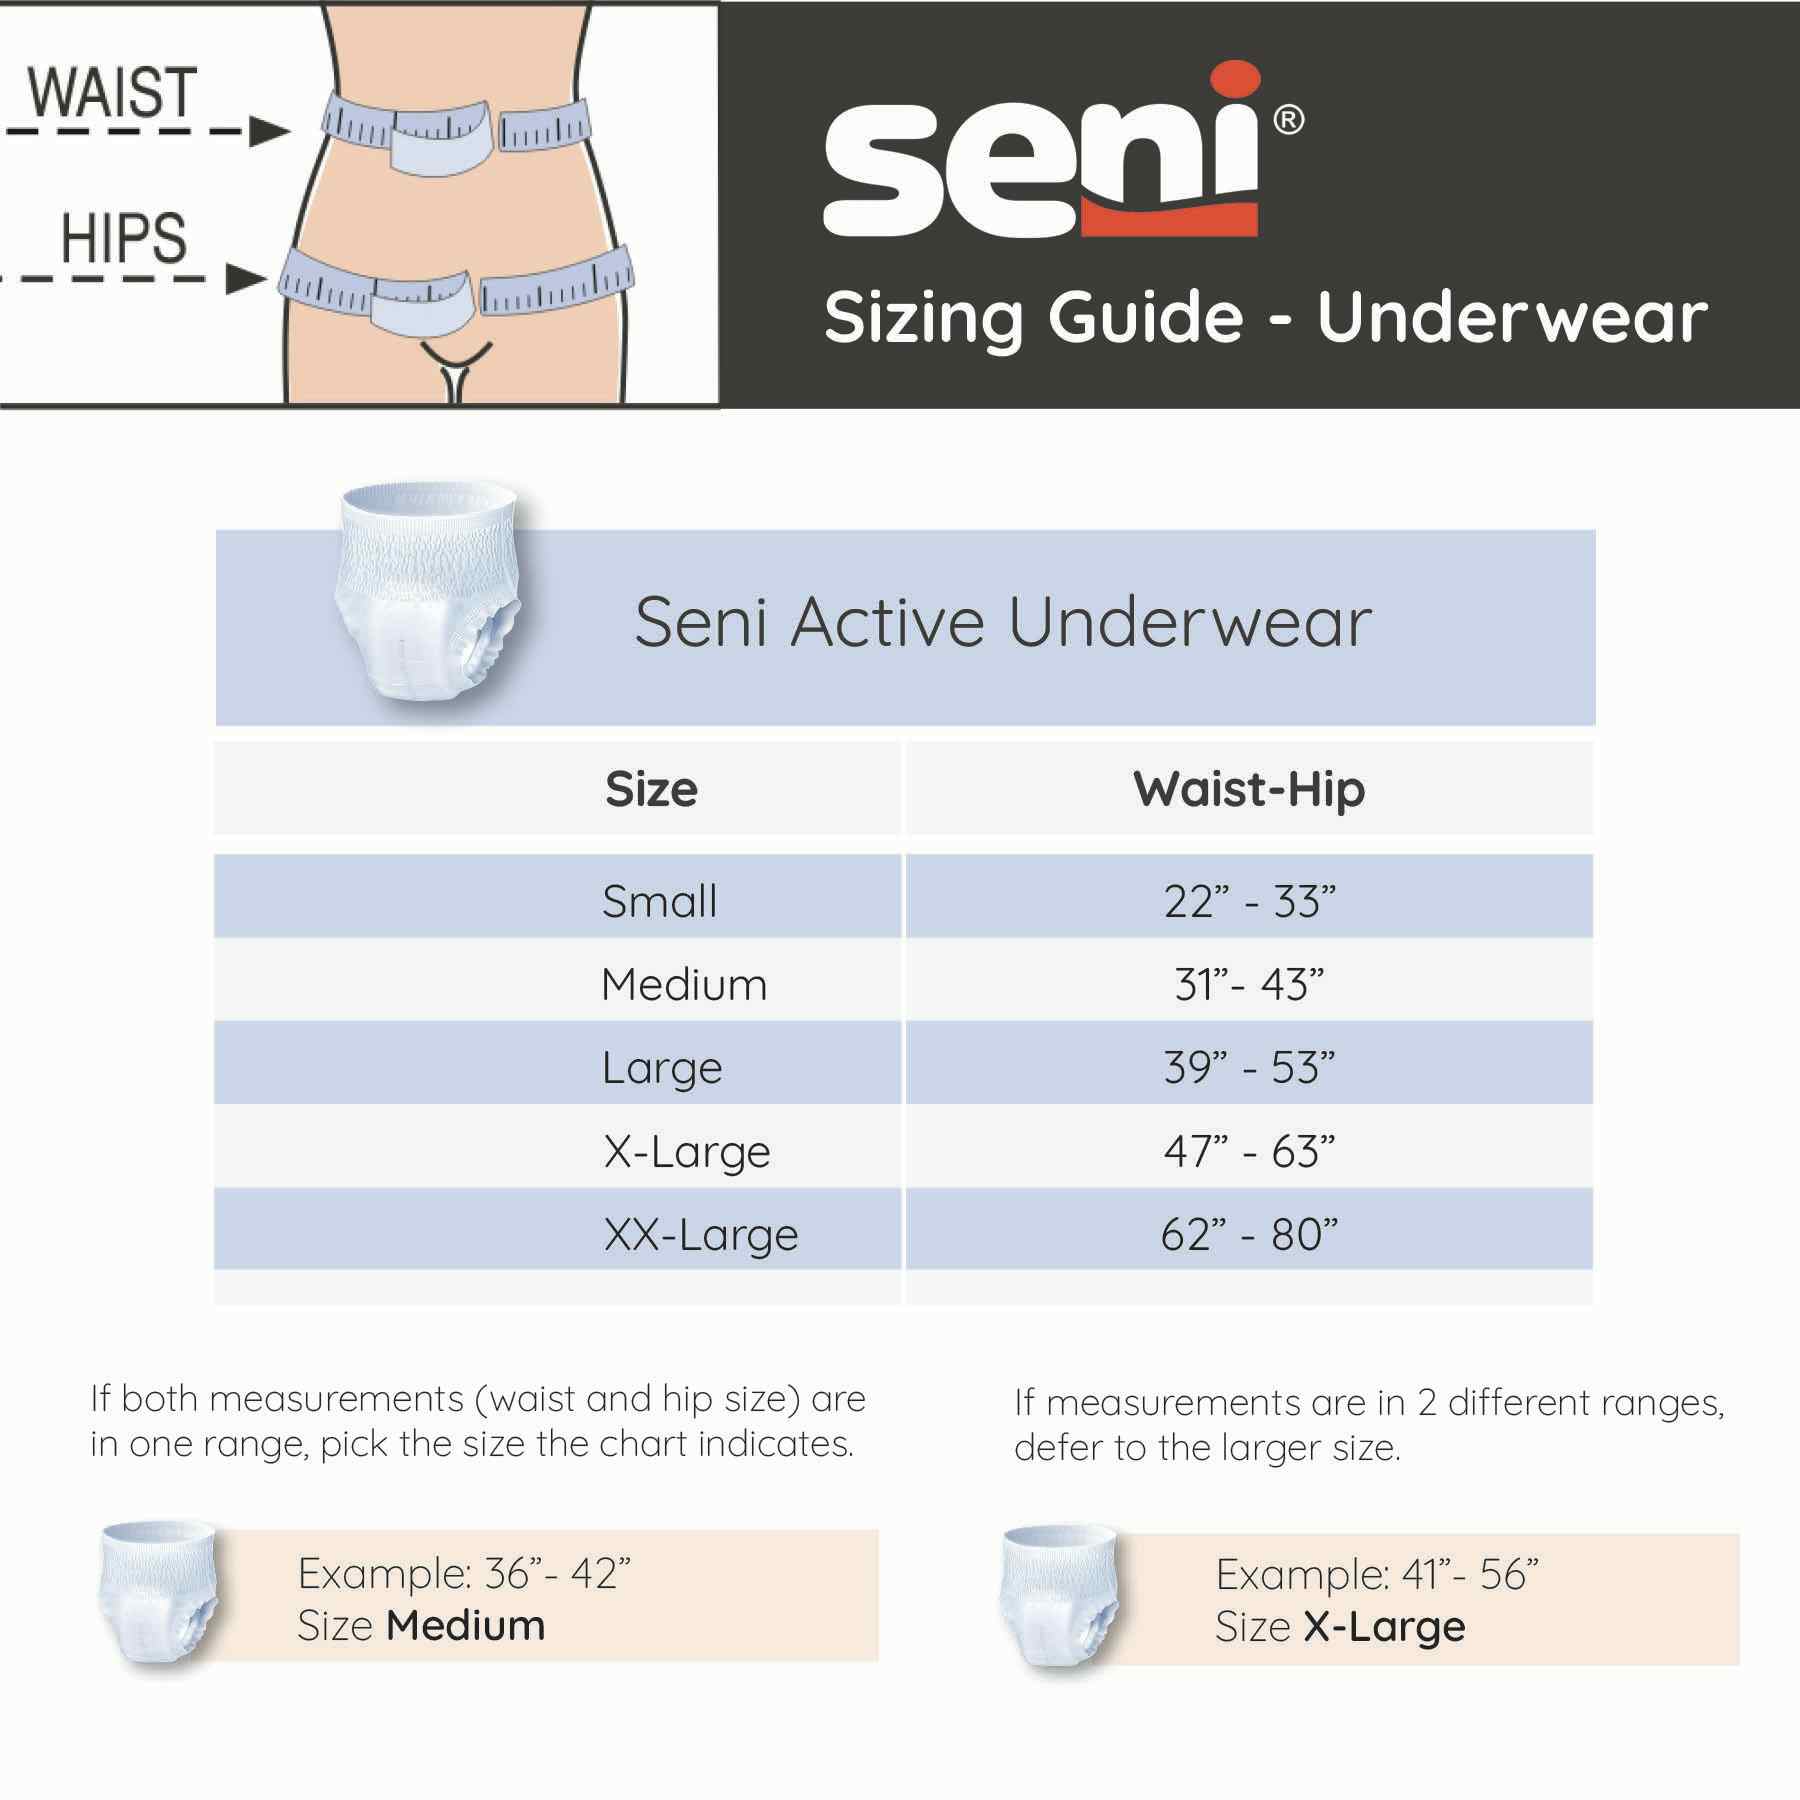 Seni Active Super Plus Disposable Underwear, Heavy Absorbency